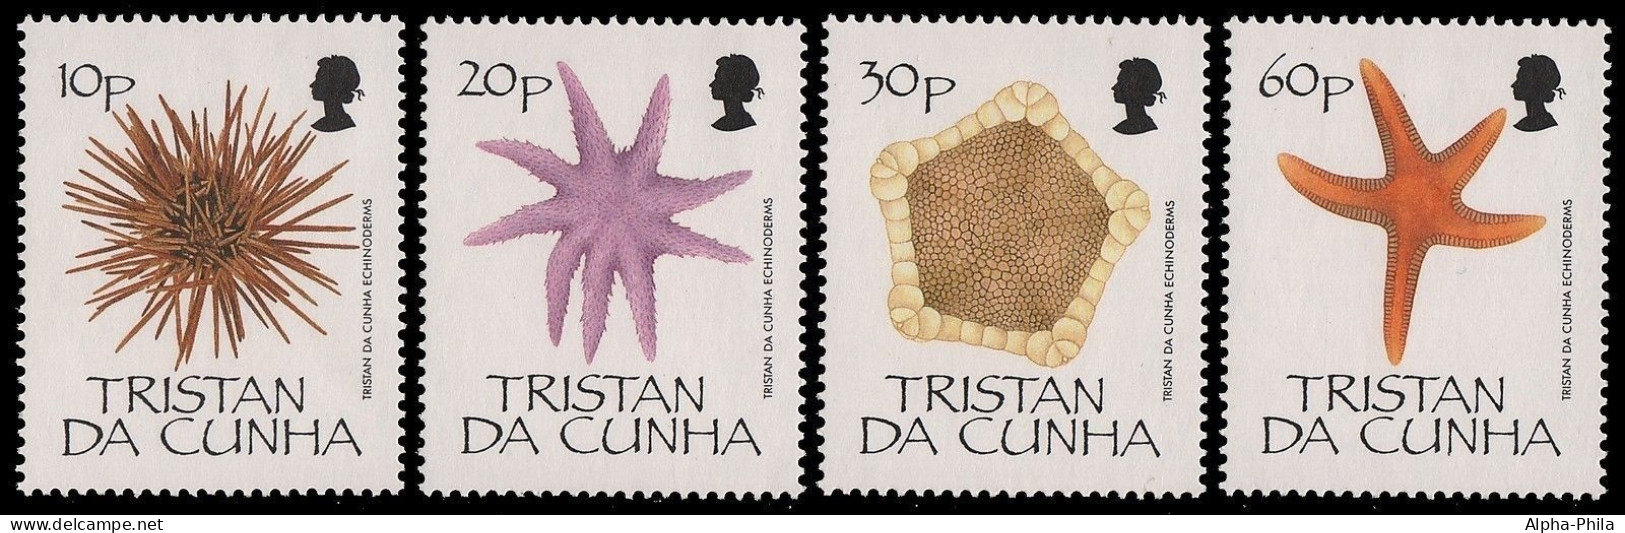 Tristan Da Cunha 1990 - Mi-Nr. 489-492 ** - MNH - Meerestiere / Marine Life - Tristan Da Cunha